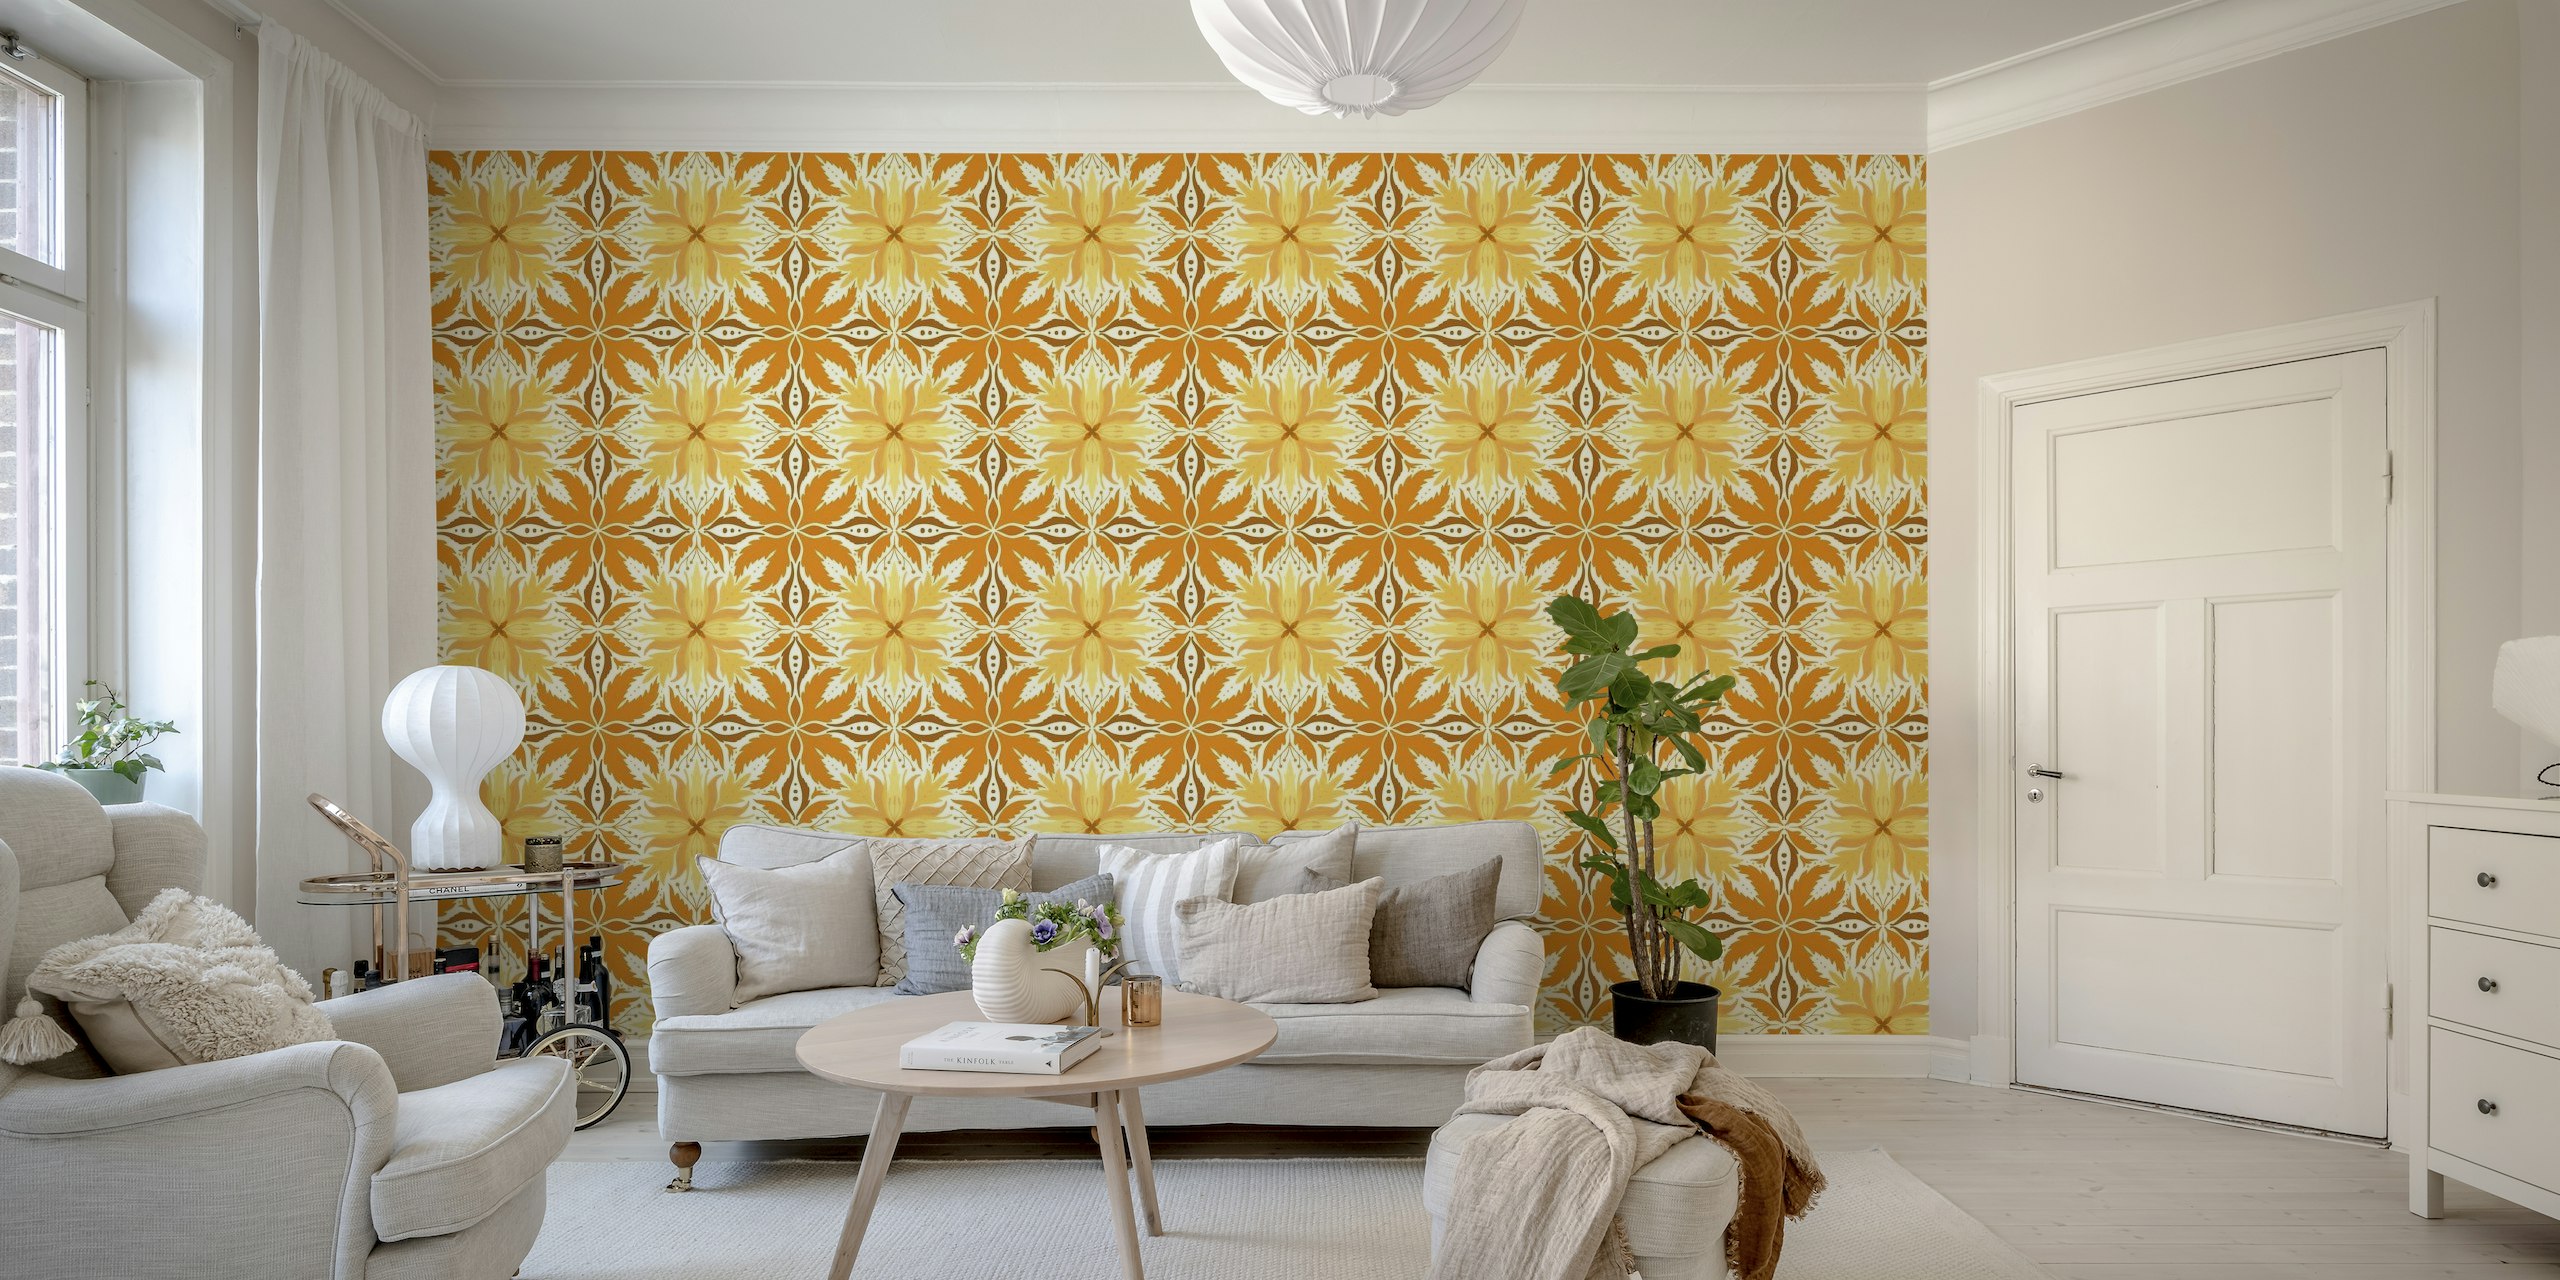 Ornate tiles, yellow and orange papiers peint